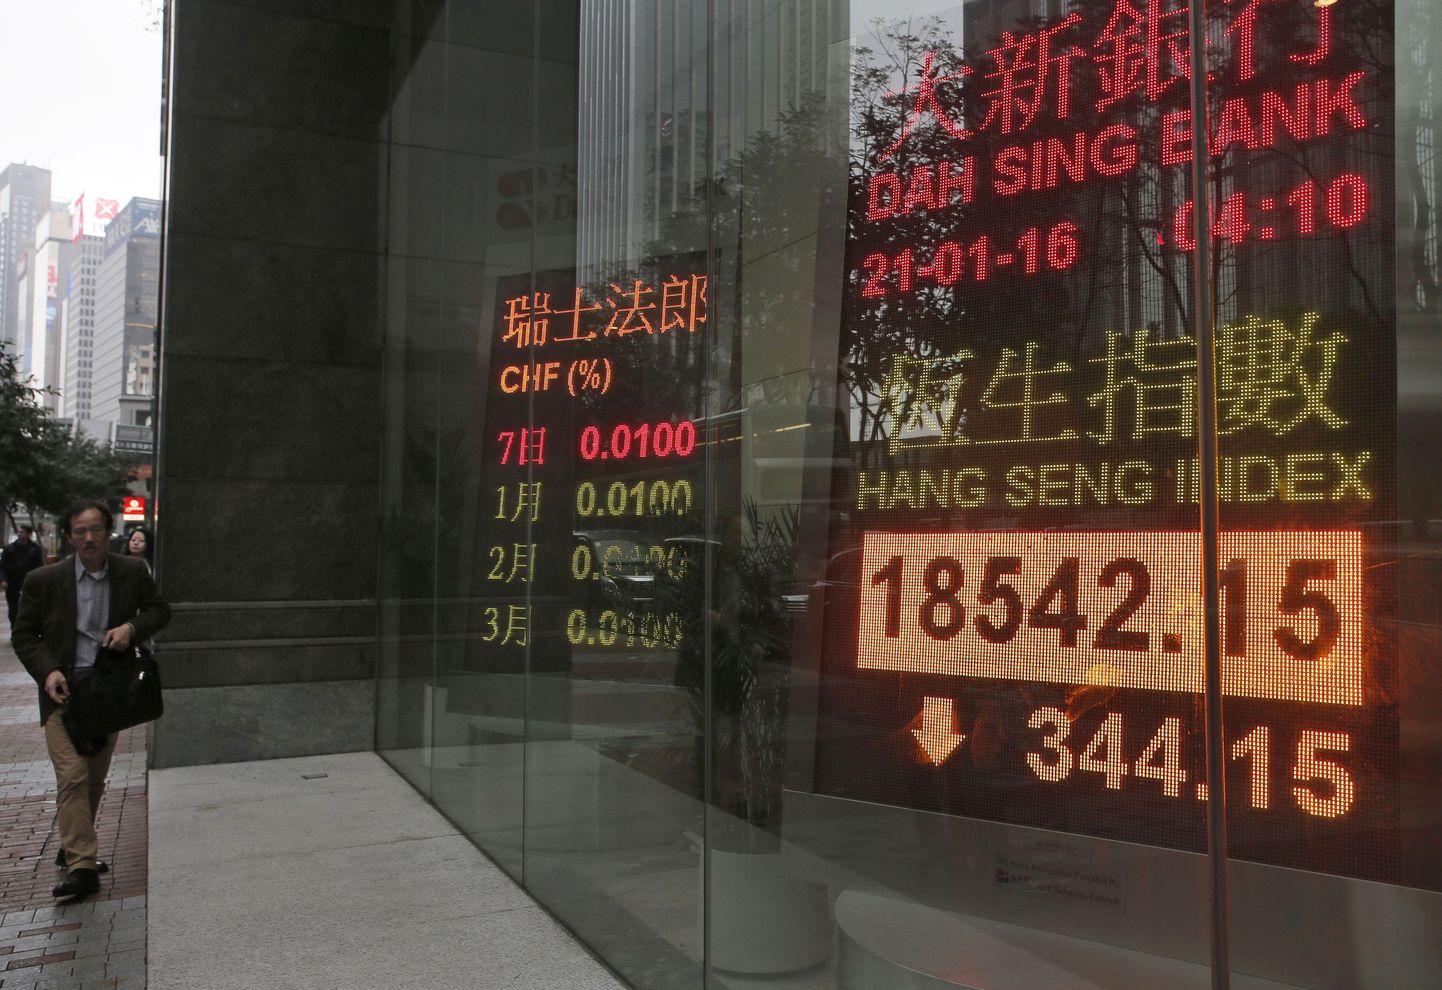 Hongkongi aktsiaindeks Hang Seng ekraanil panga vaateaknal.